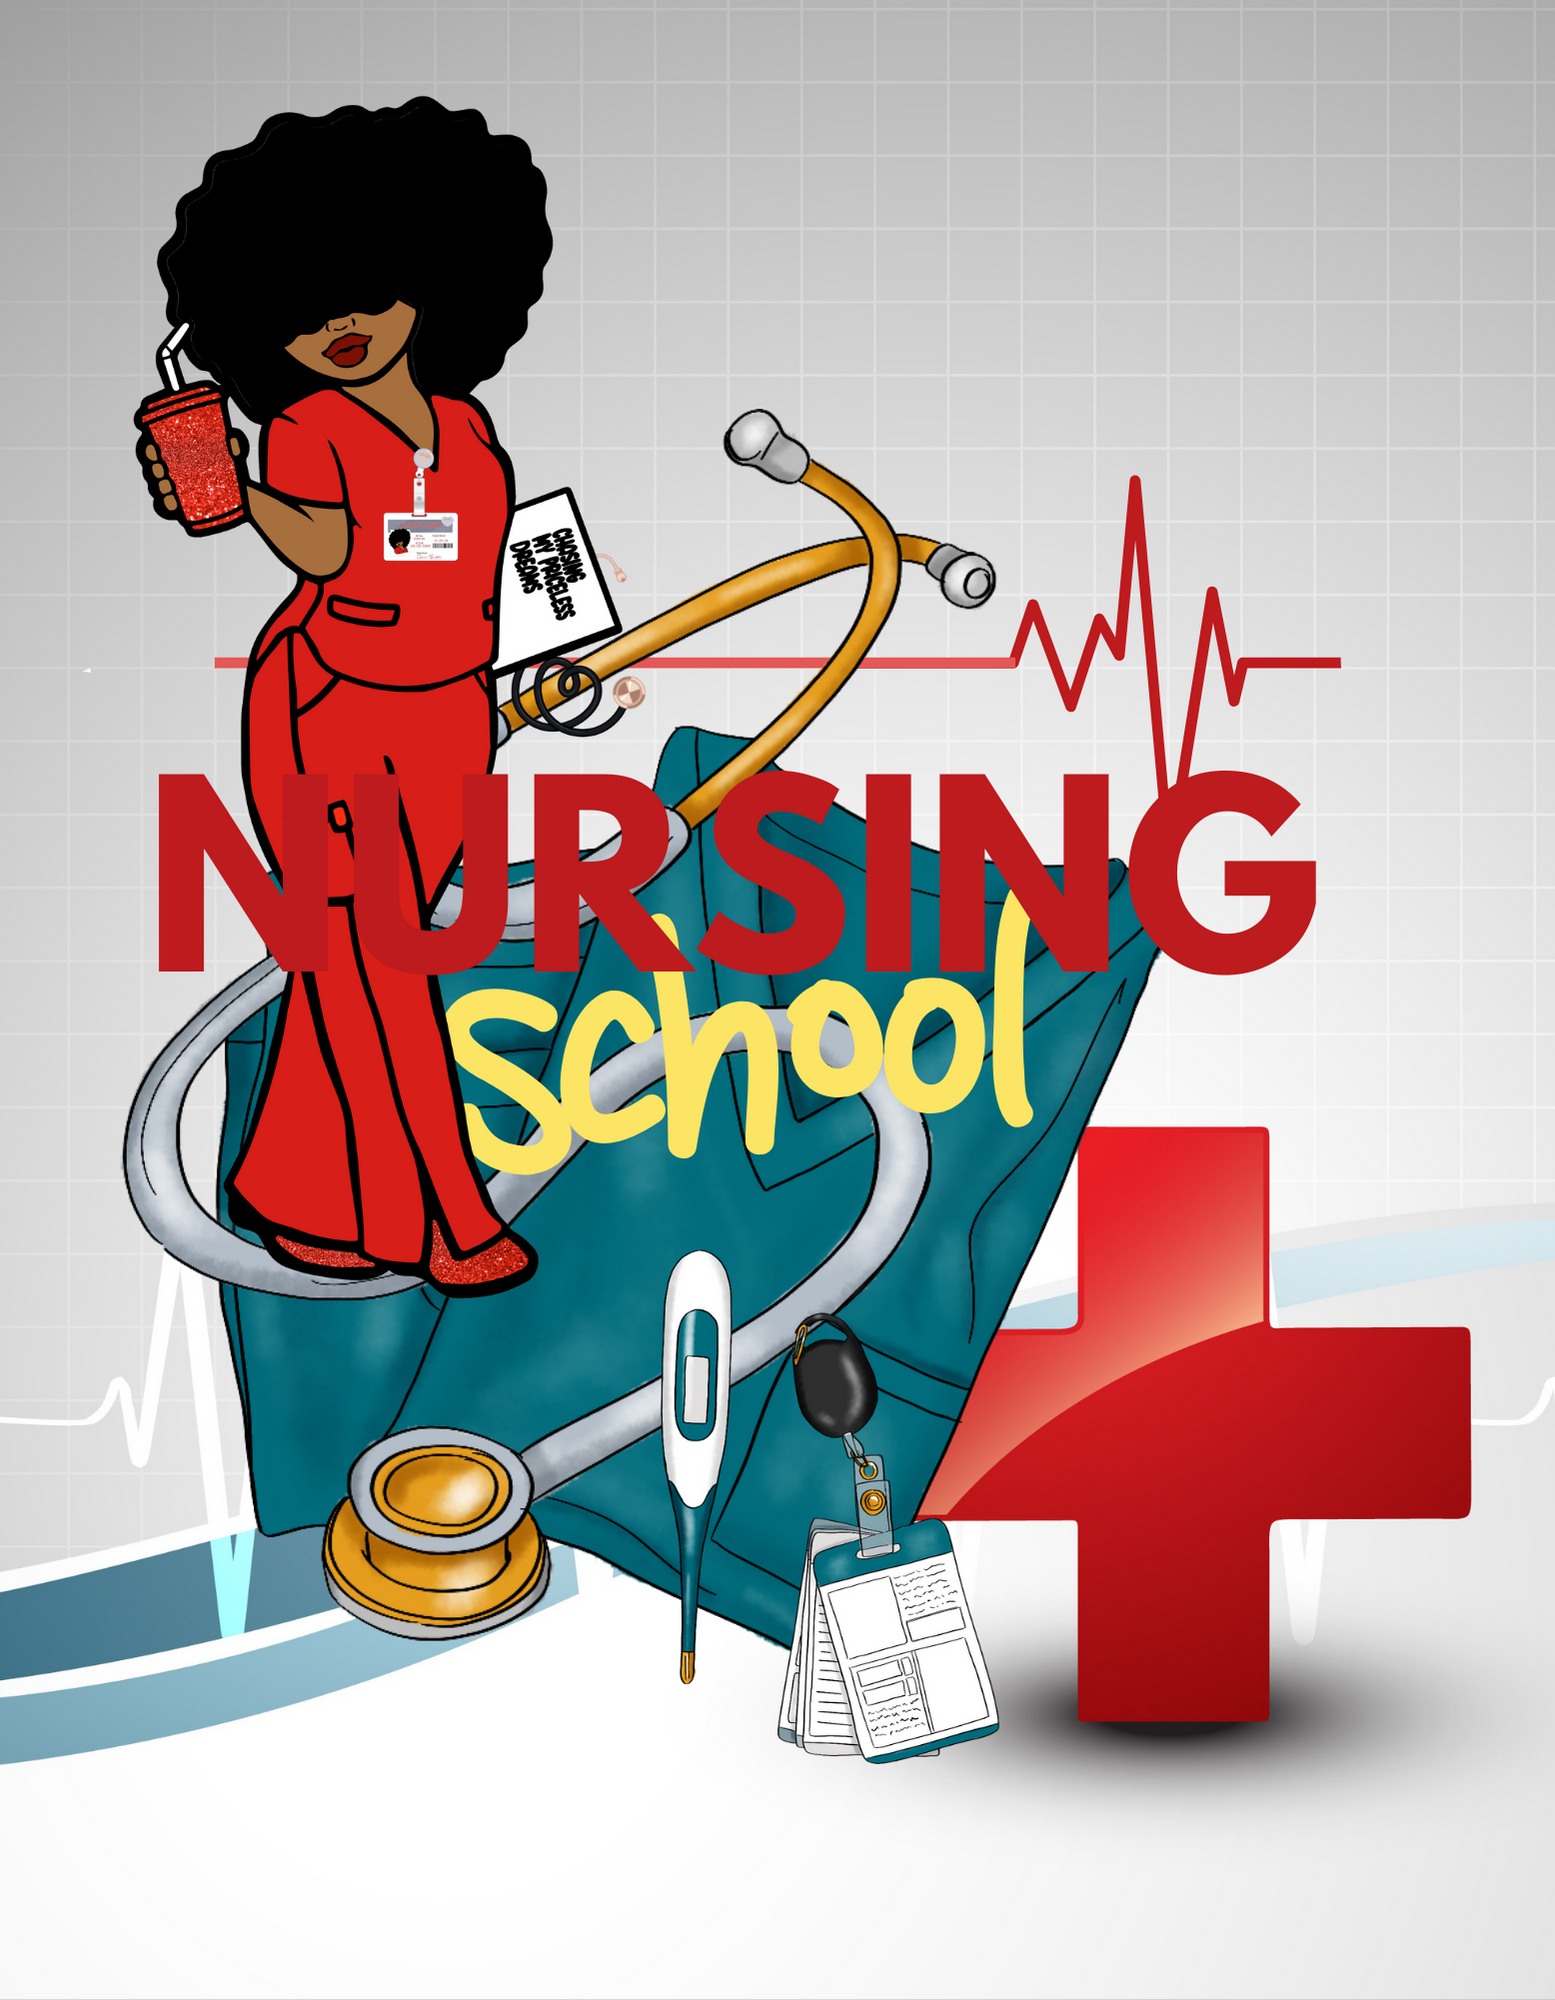 Nursing School Companion Journal and Planner